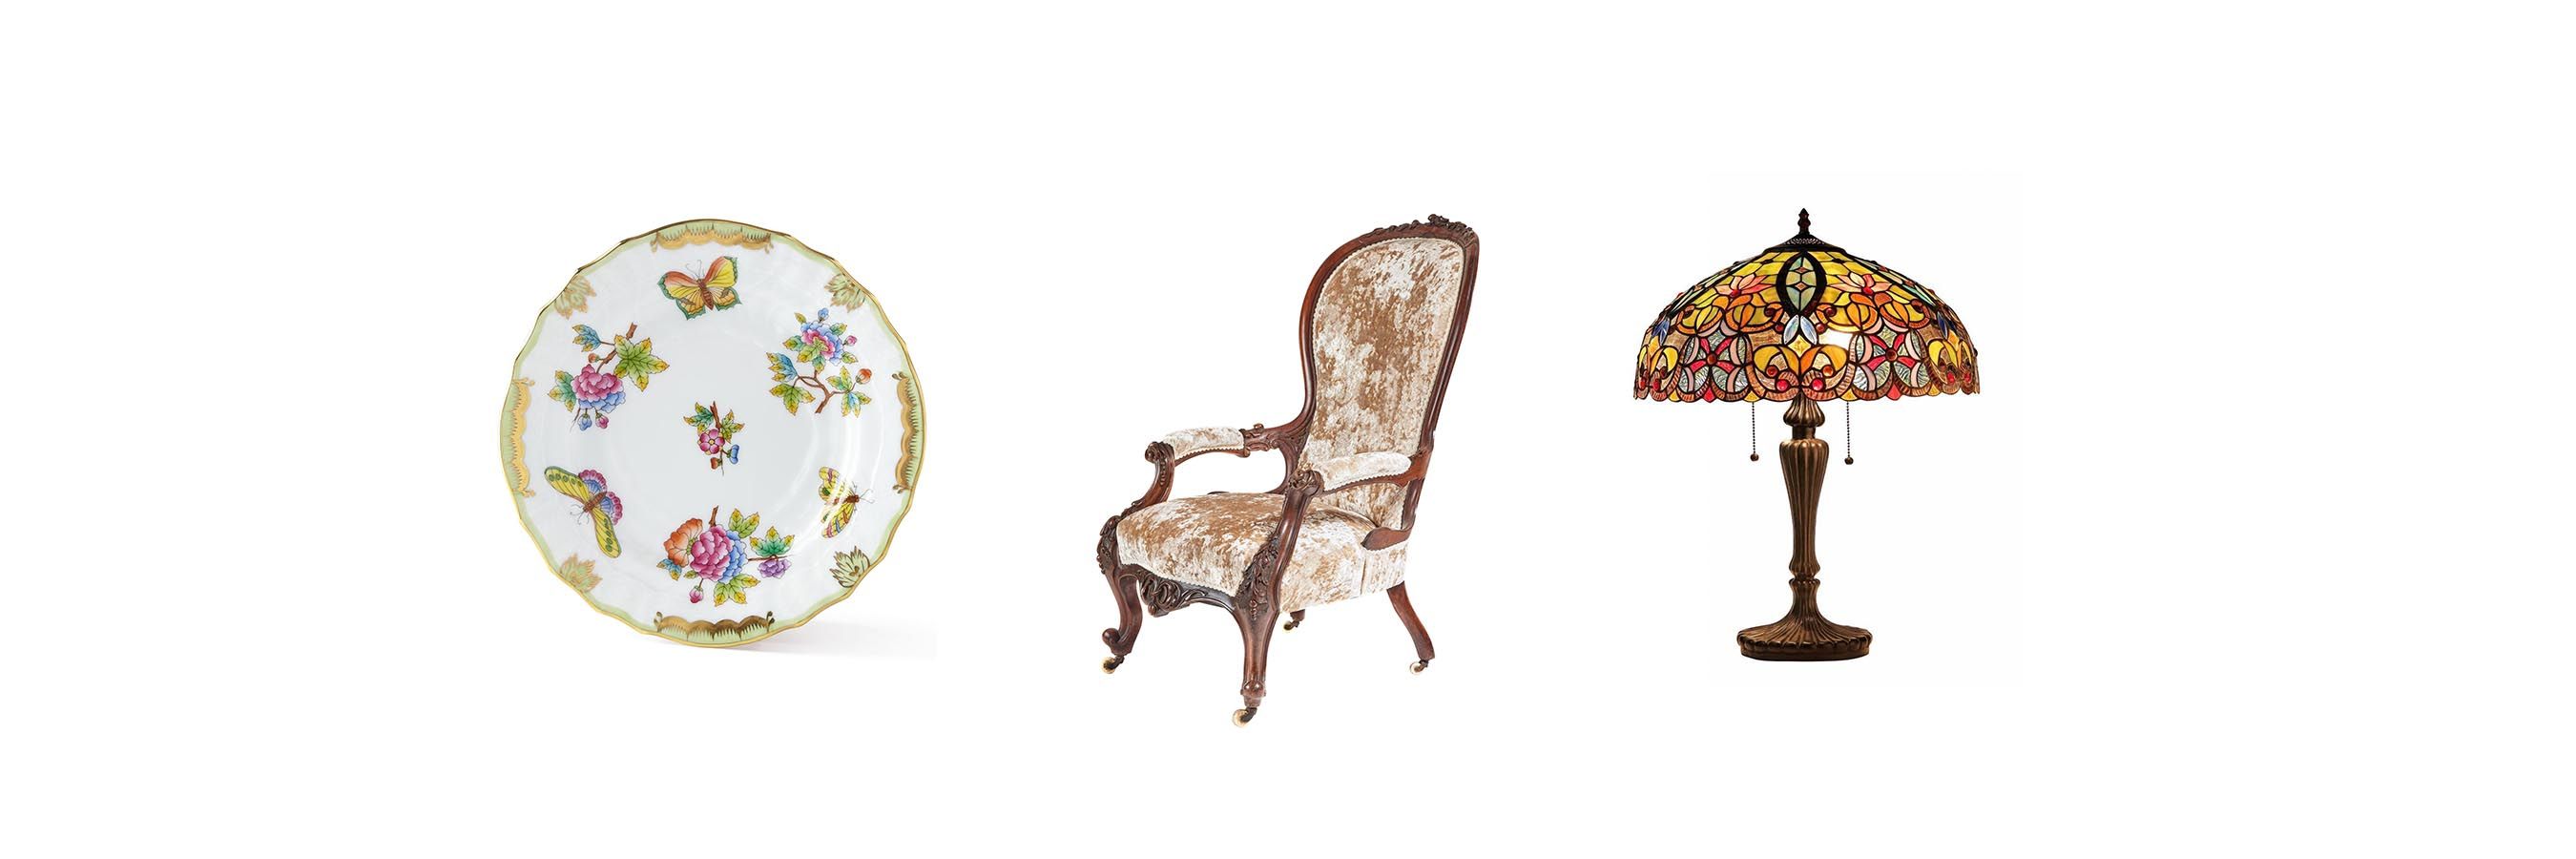 20 Victorian Furniture Ideas Home Decor Ideas